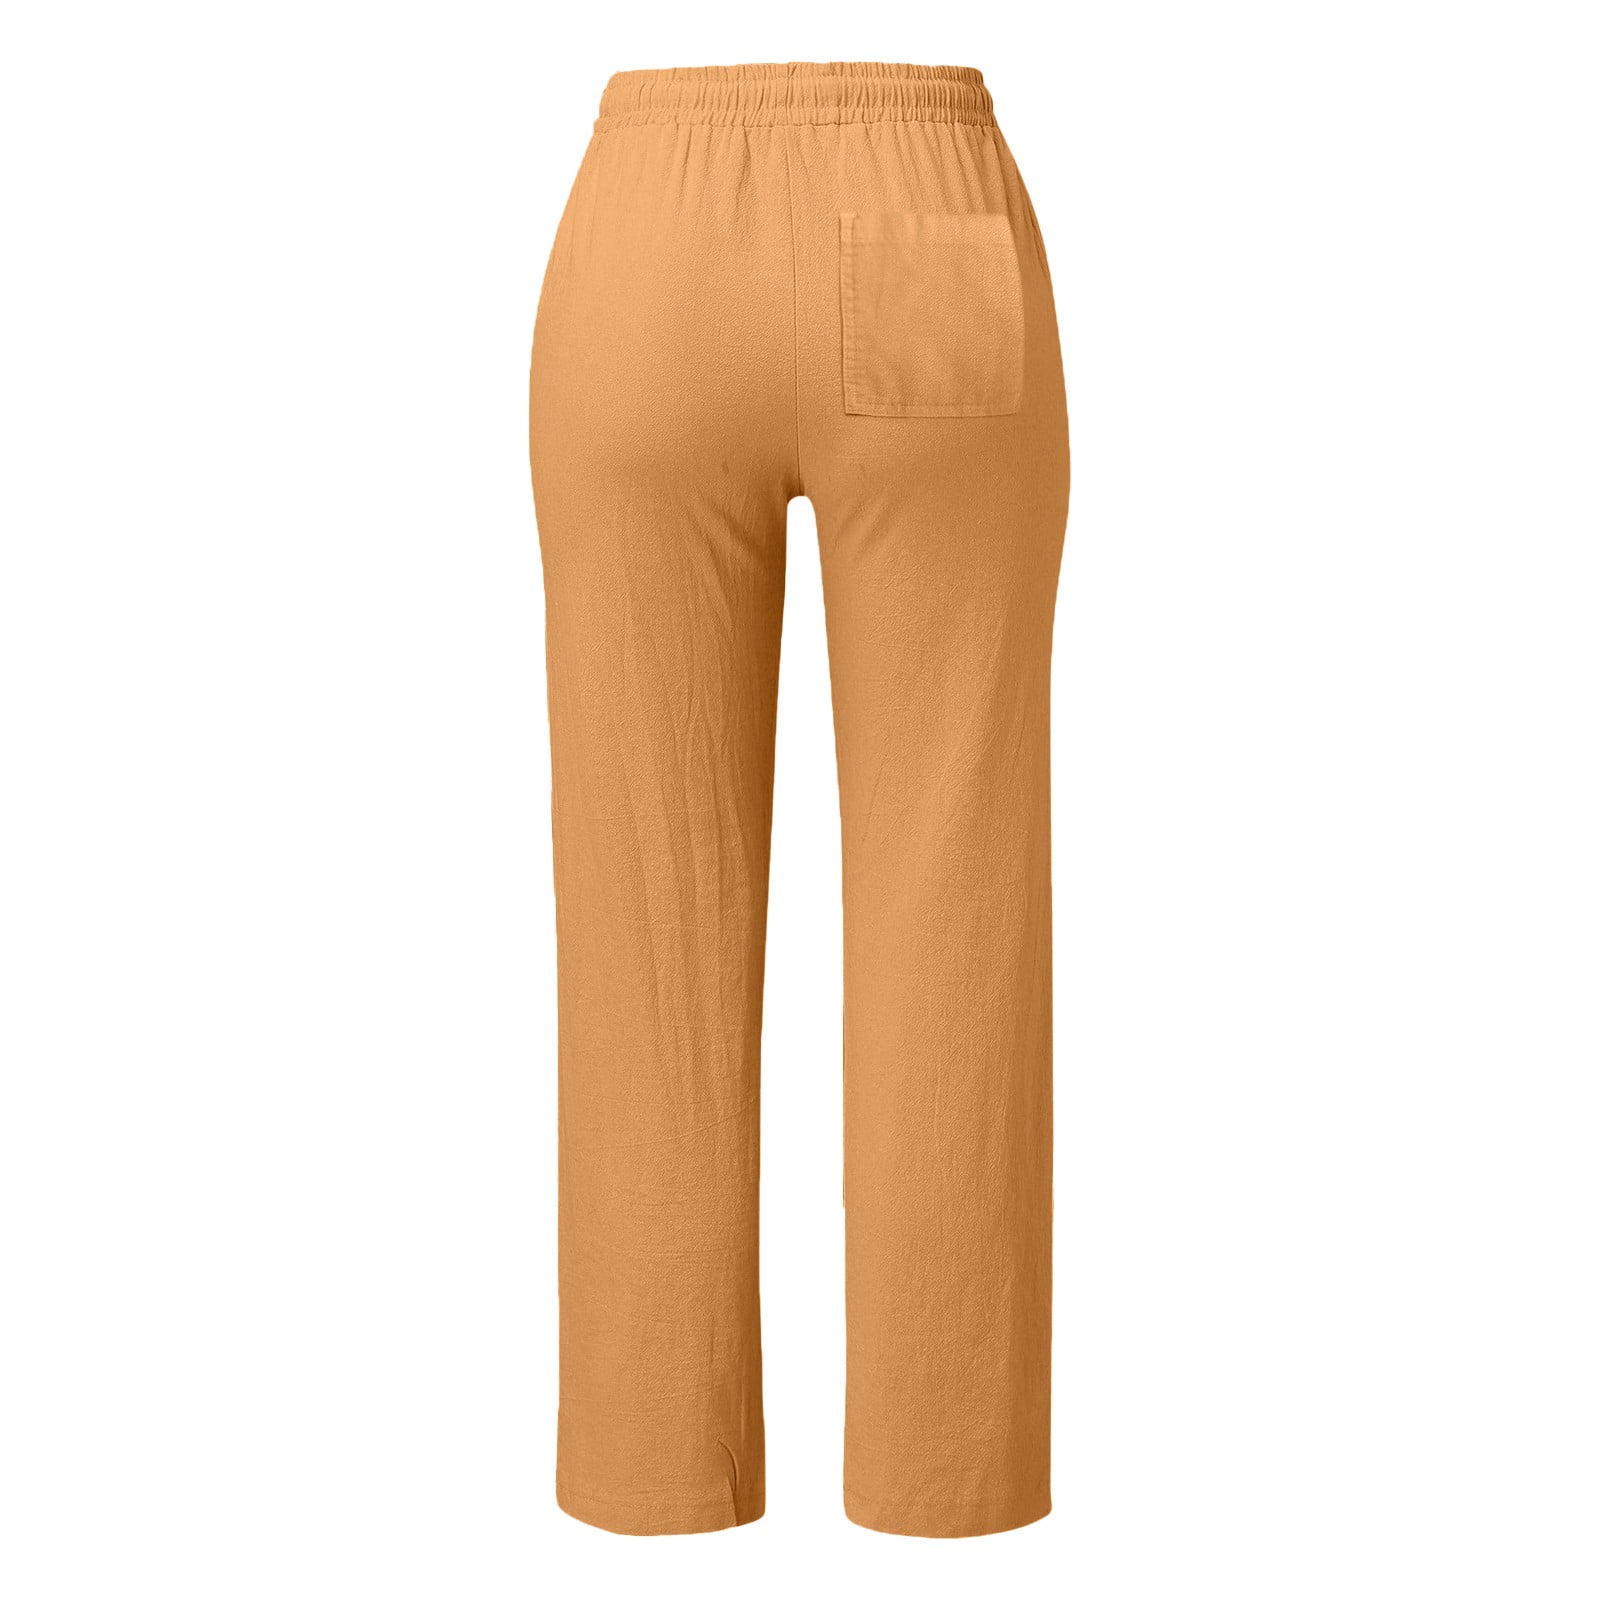 Akiihool Pants for Women Yoga Dress Pants for Women Straight Leg Pull On  Pants with Pockets (Orange,L) 